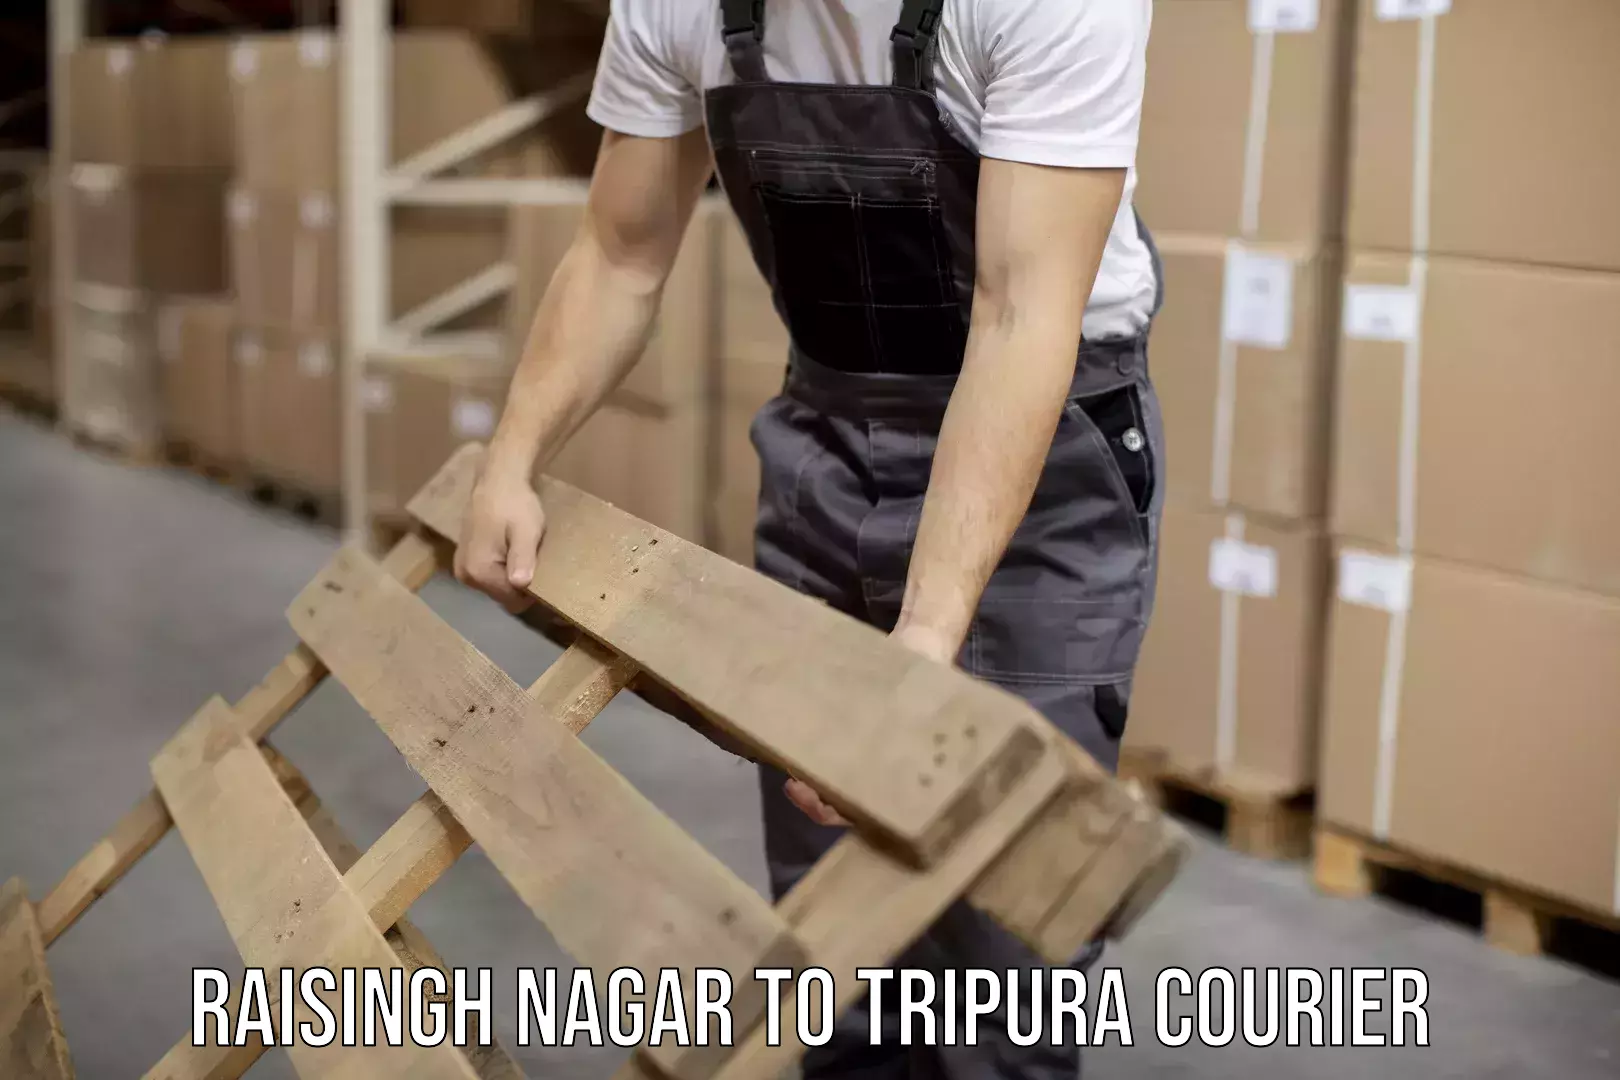 Multi-city courier Raisingh Nagar to Tripura